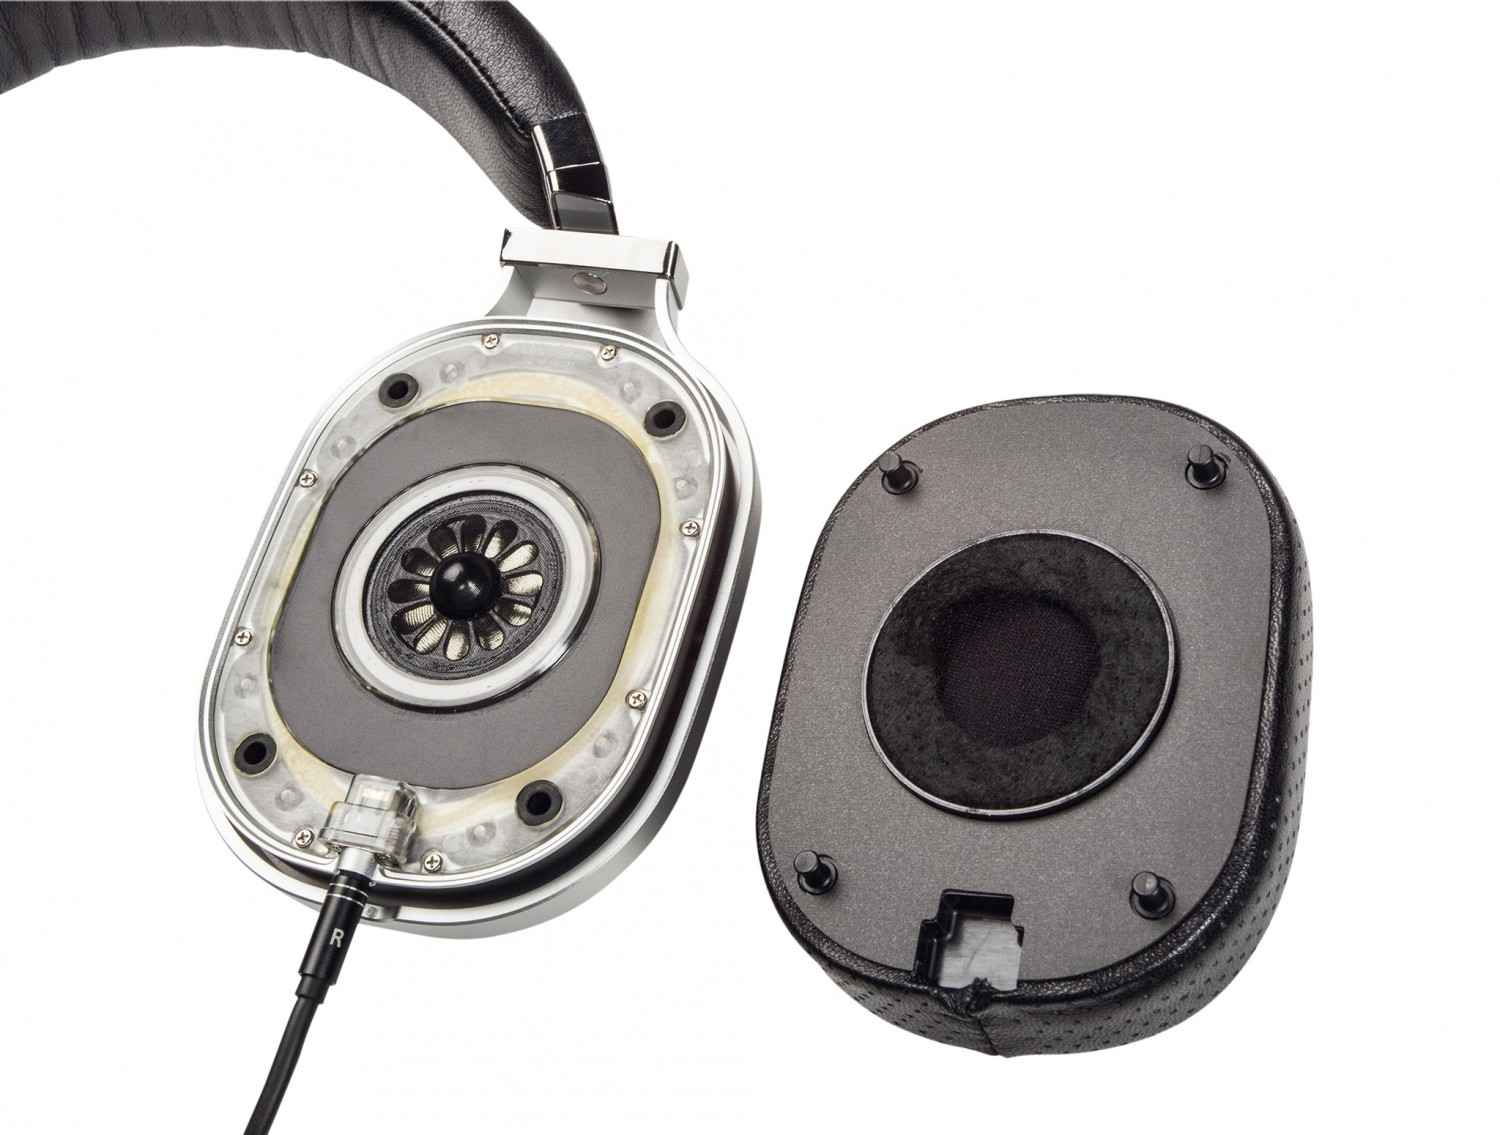 Kopfhörer Hifi Oppo PM-1 im Test, Bild 2